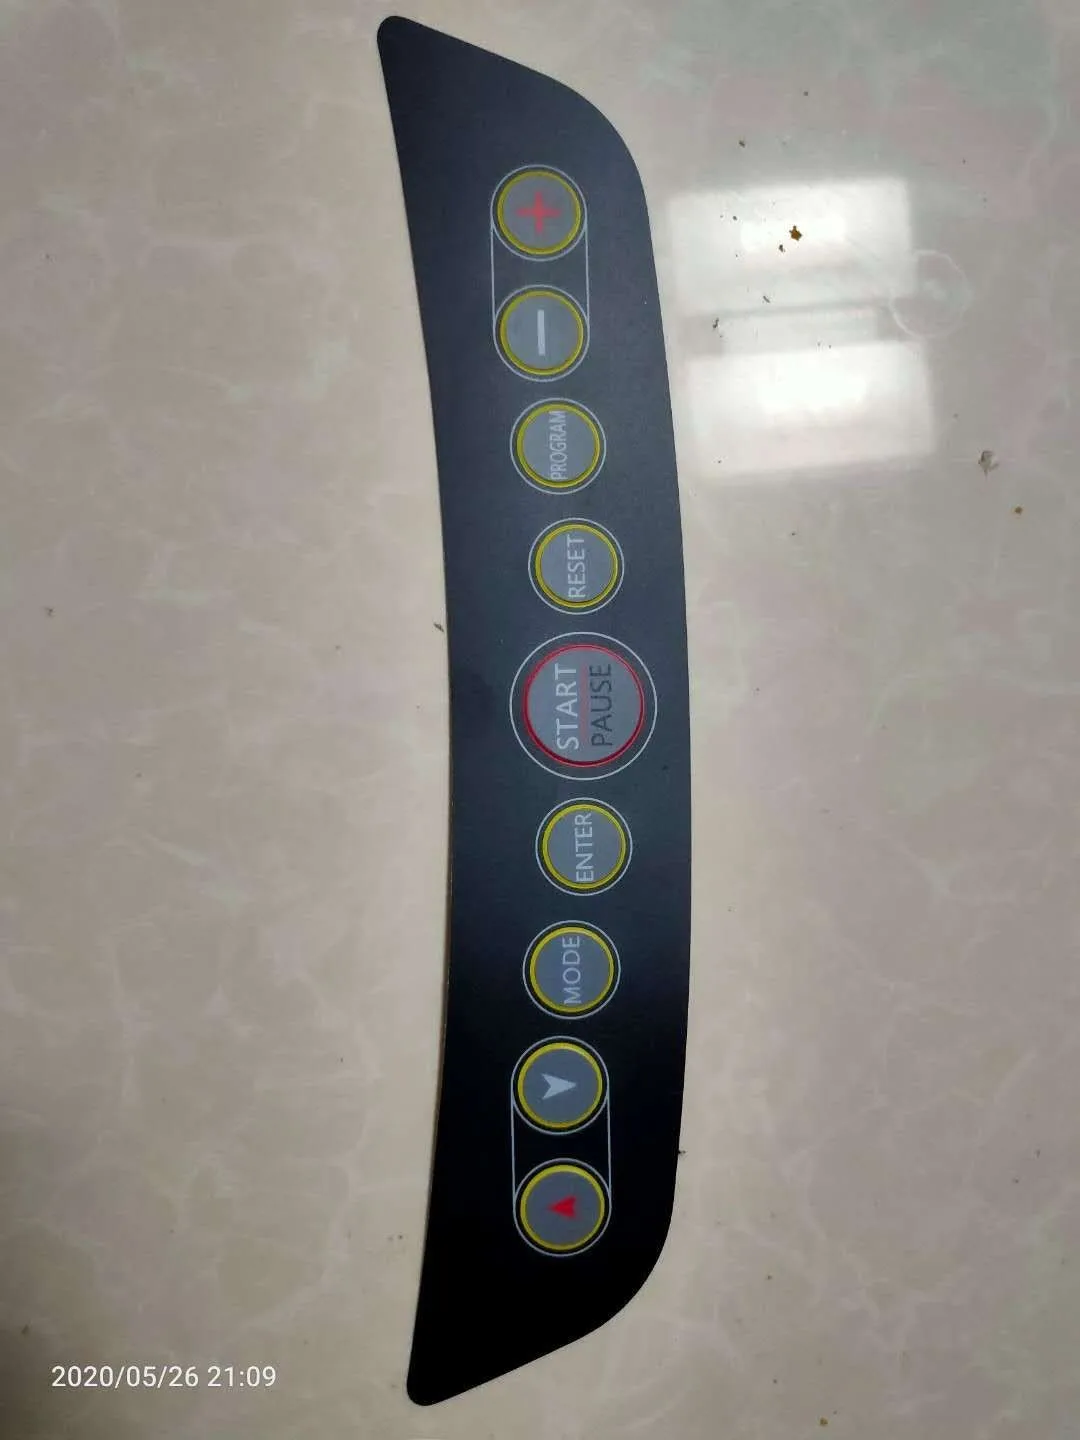 

Ol maibaohe treadmill accessories film key S900 button film switch sticker baodelong